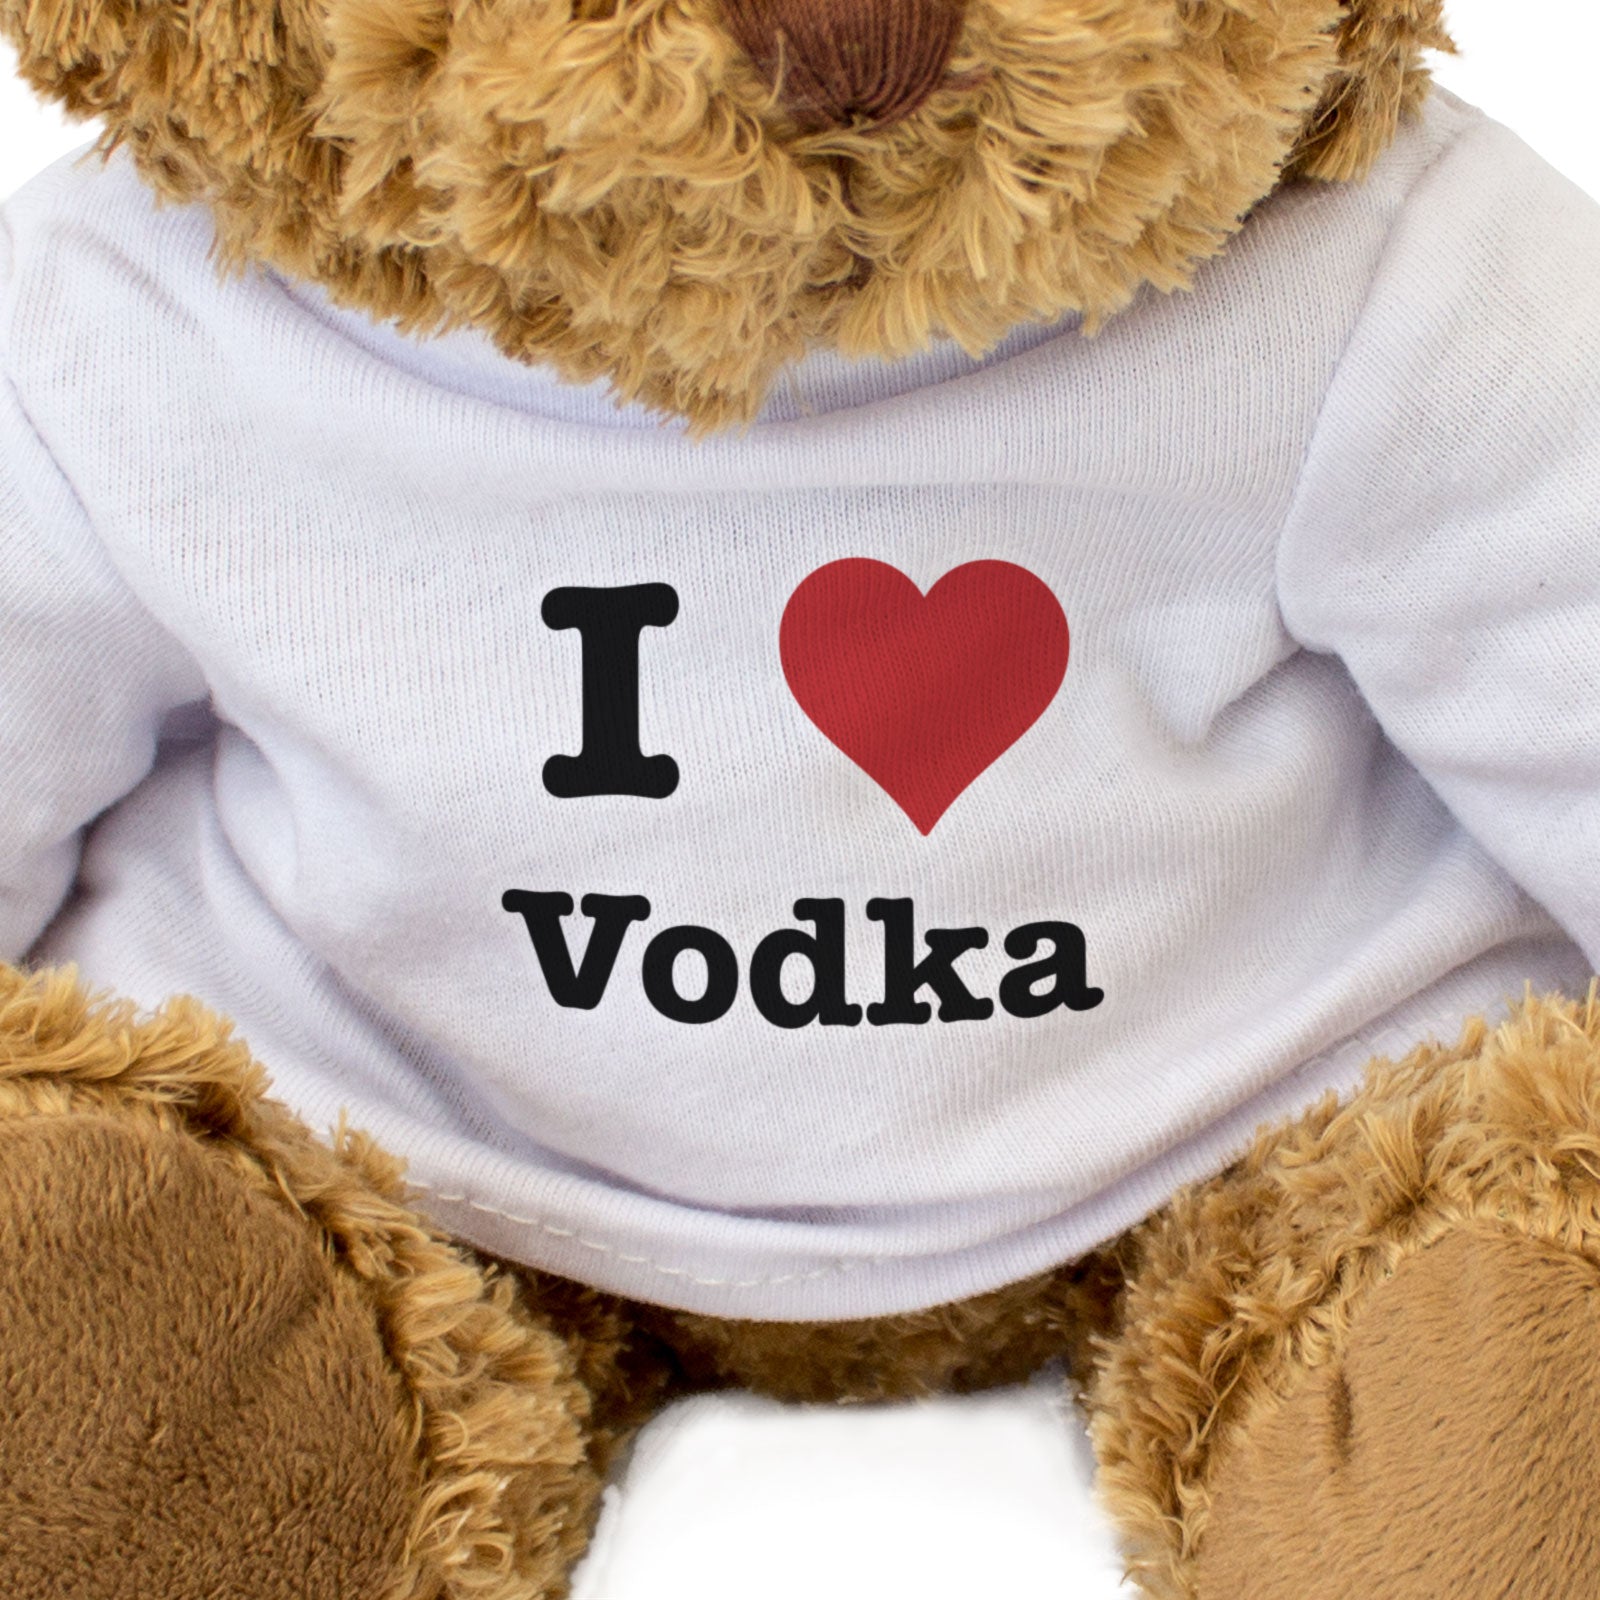 I Love Vodka - Teddy Bear